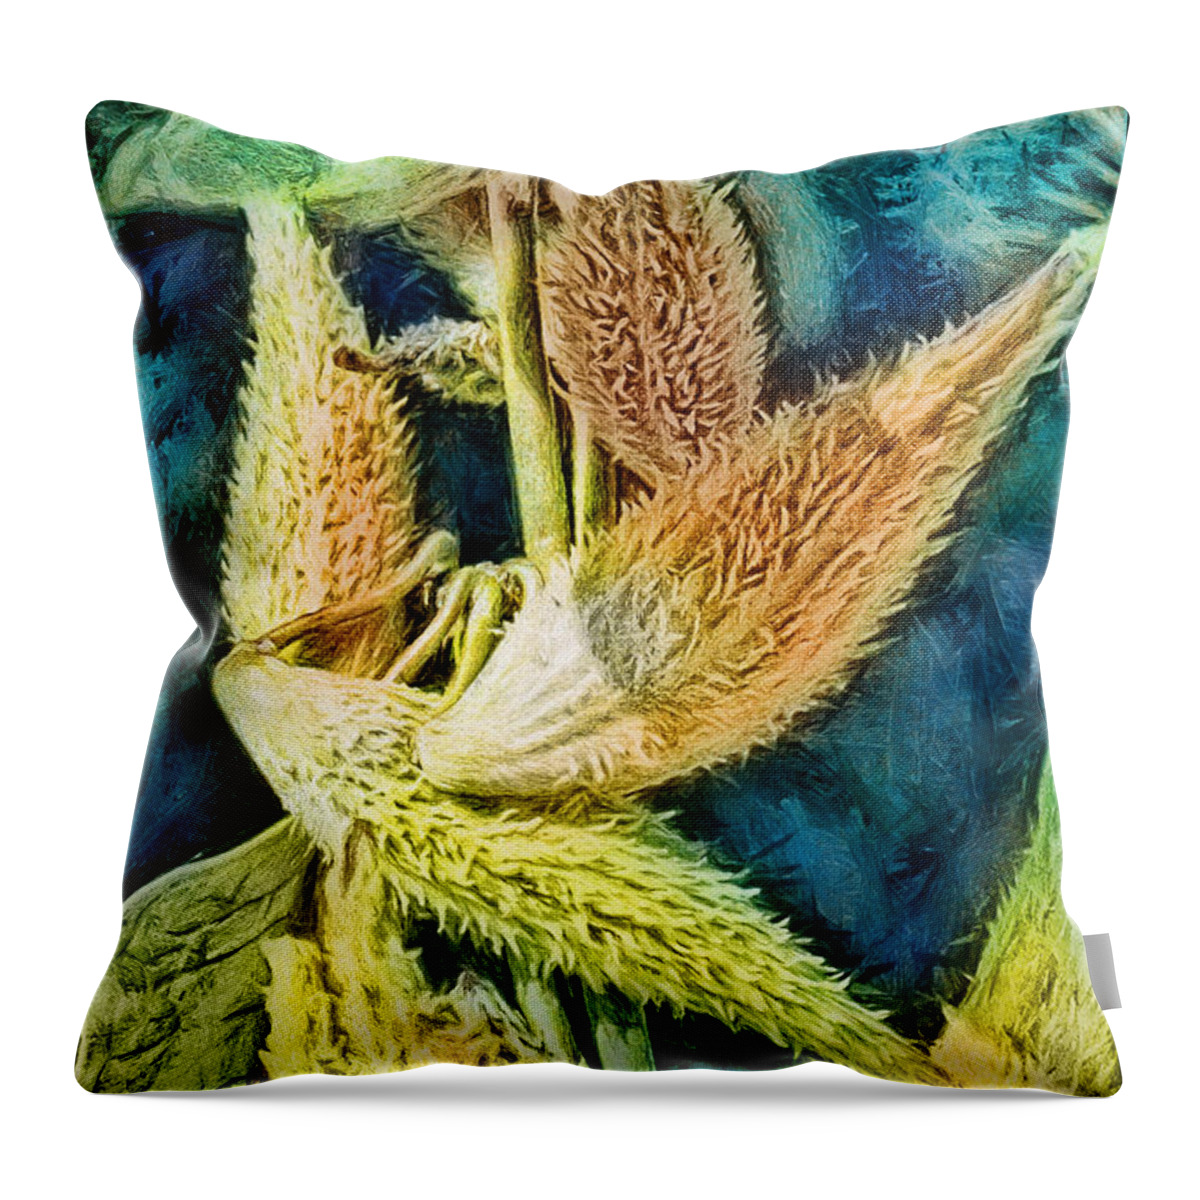 Plants Throw Pillow featuring the digital art Prickly Pods by Jo-Anne Gazo-McKim